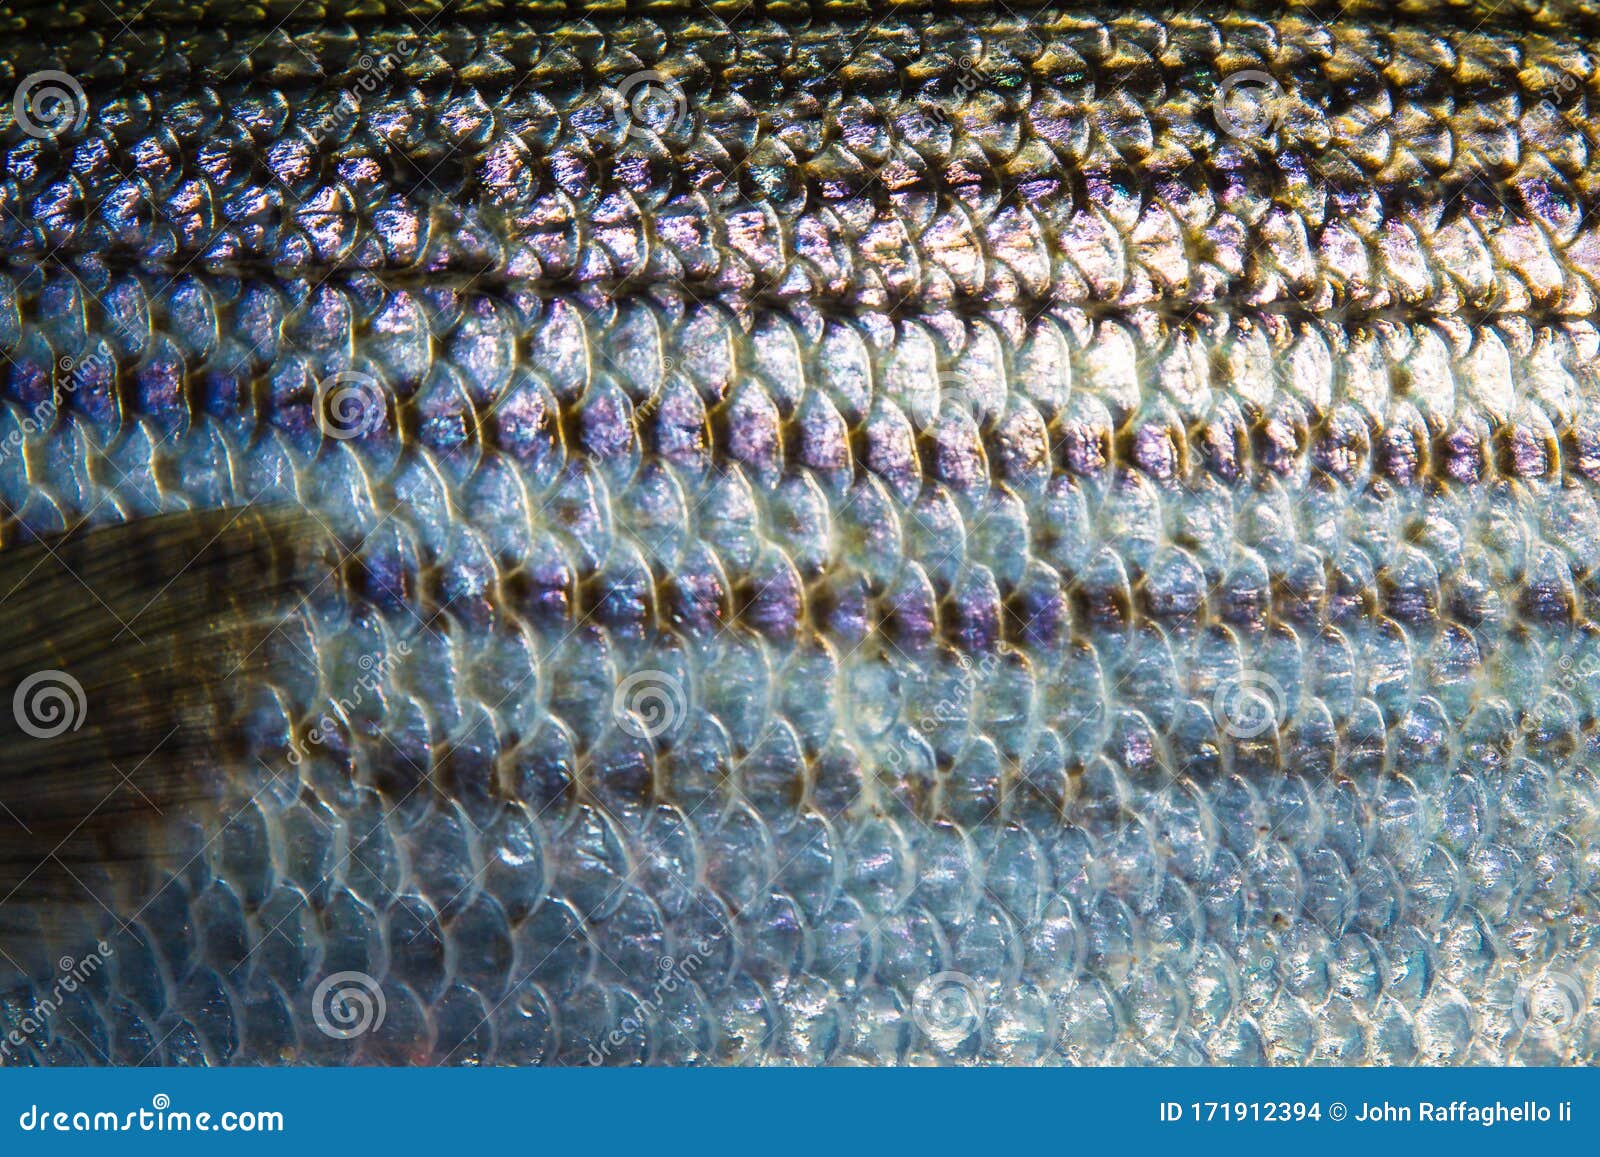 Striped bass pattern stock photo. Image of photograph - 171912394